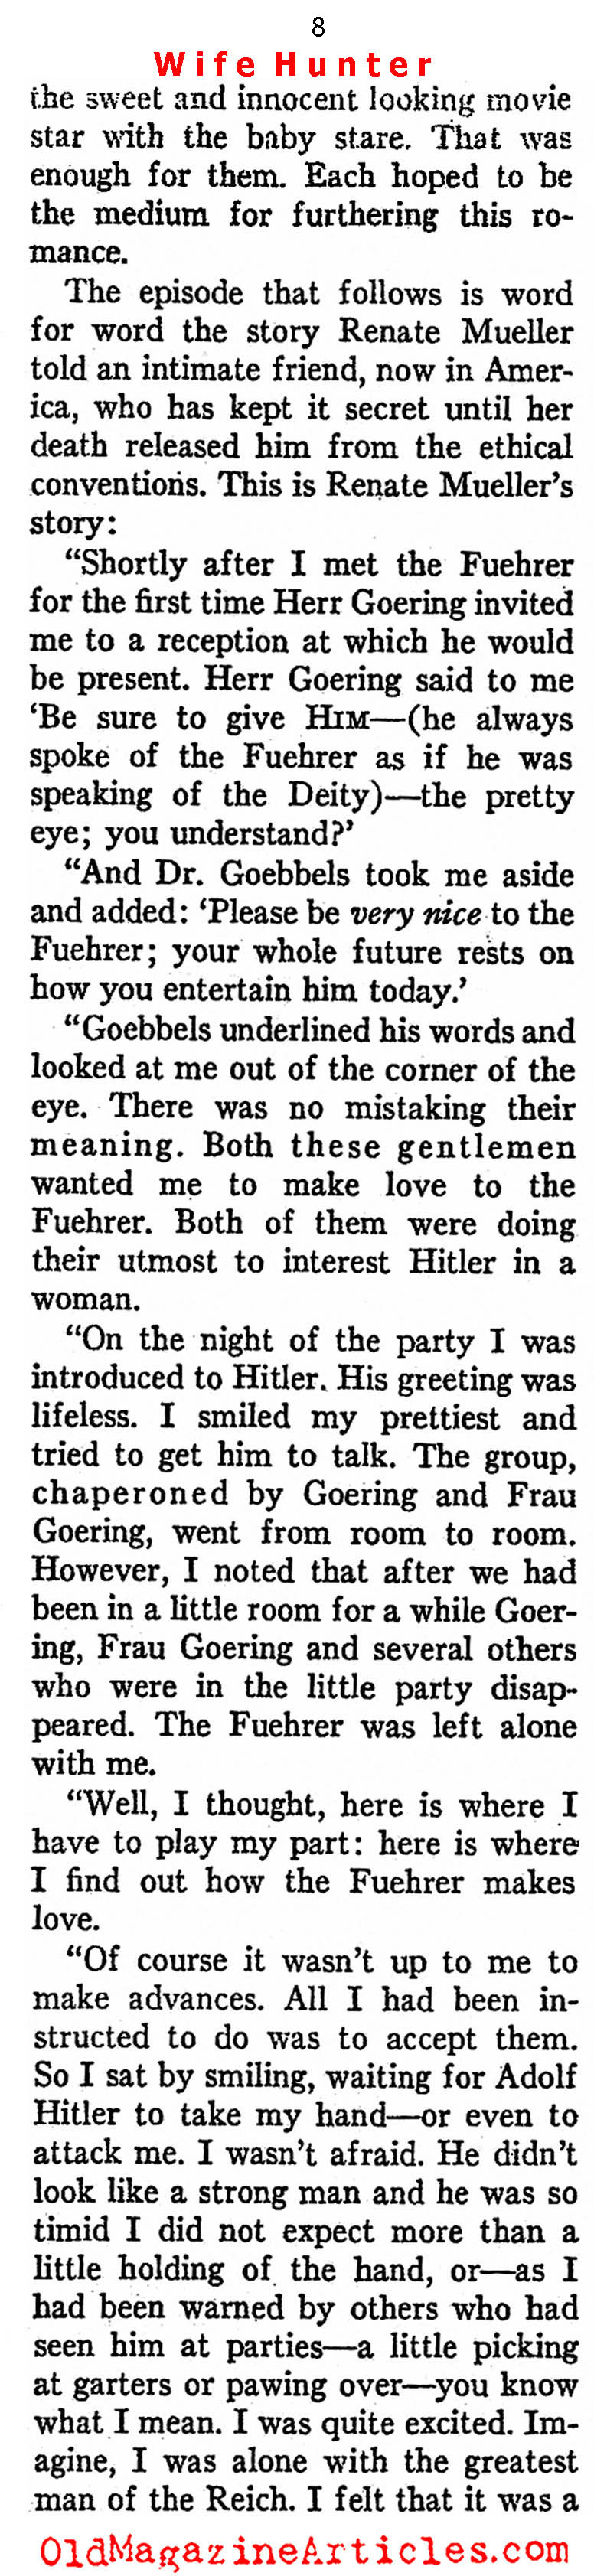 Hitler Goes Wife Shopping (Ken Magazine, 1938)